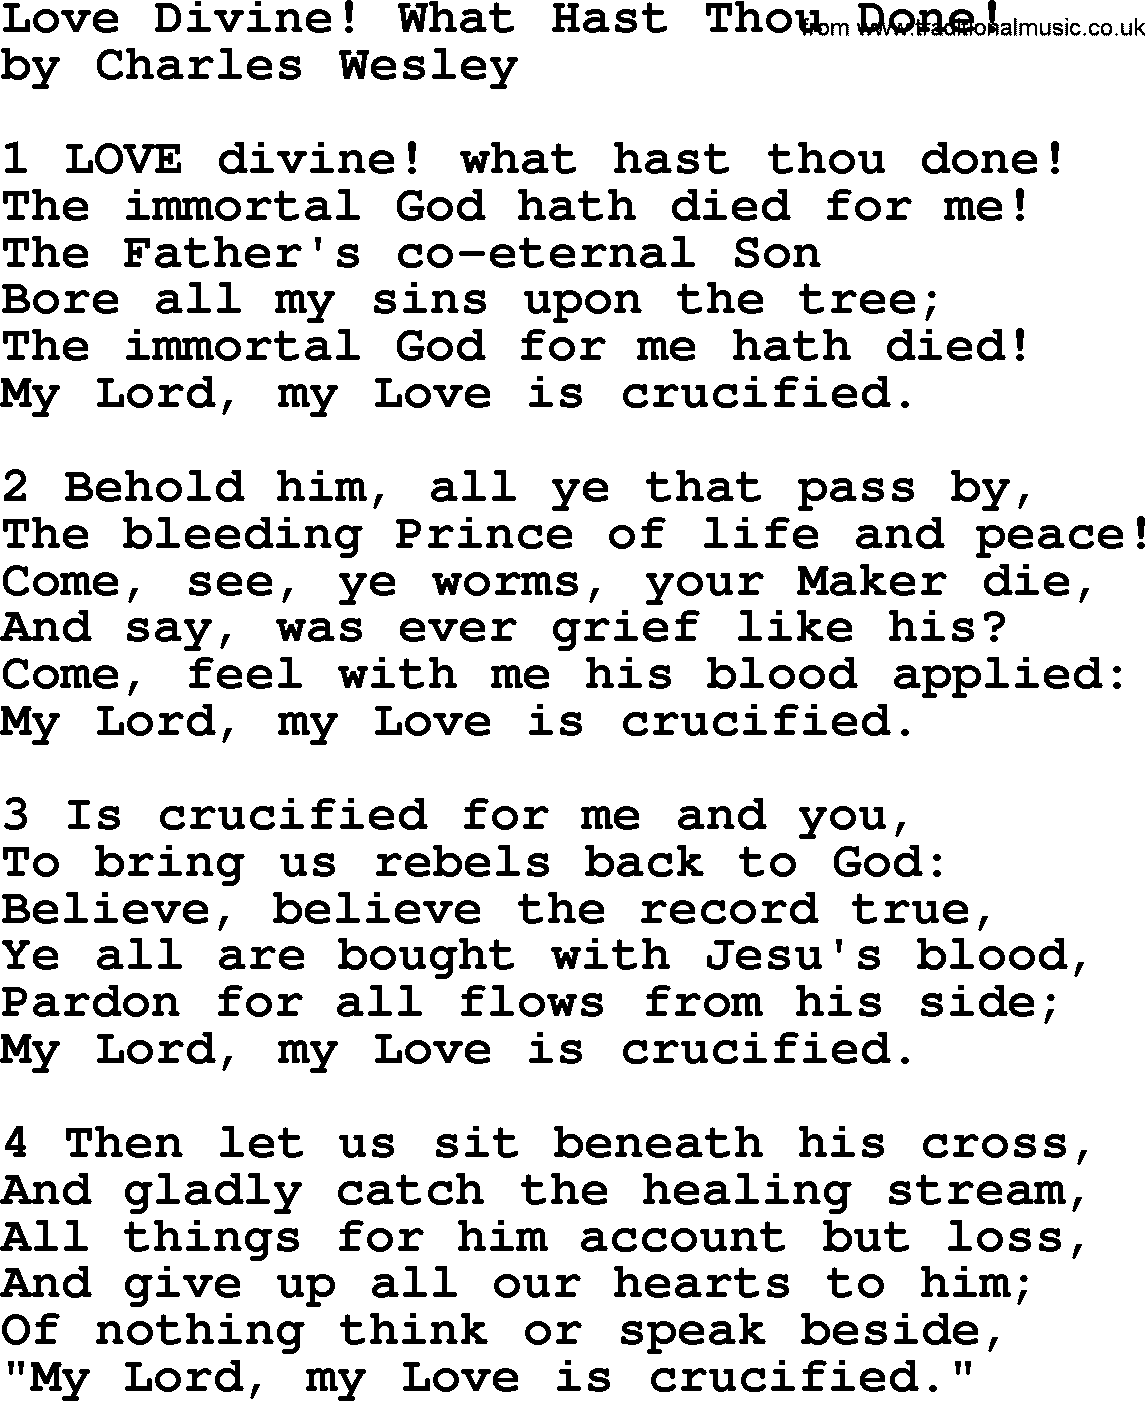 Charles Wesley hymn: Love Divine! What Hast Thou Done!, lyrics